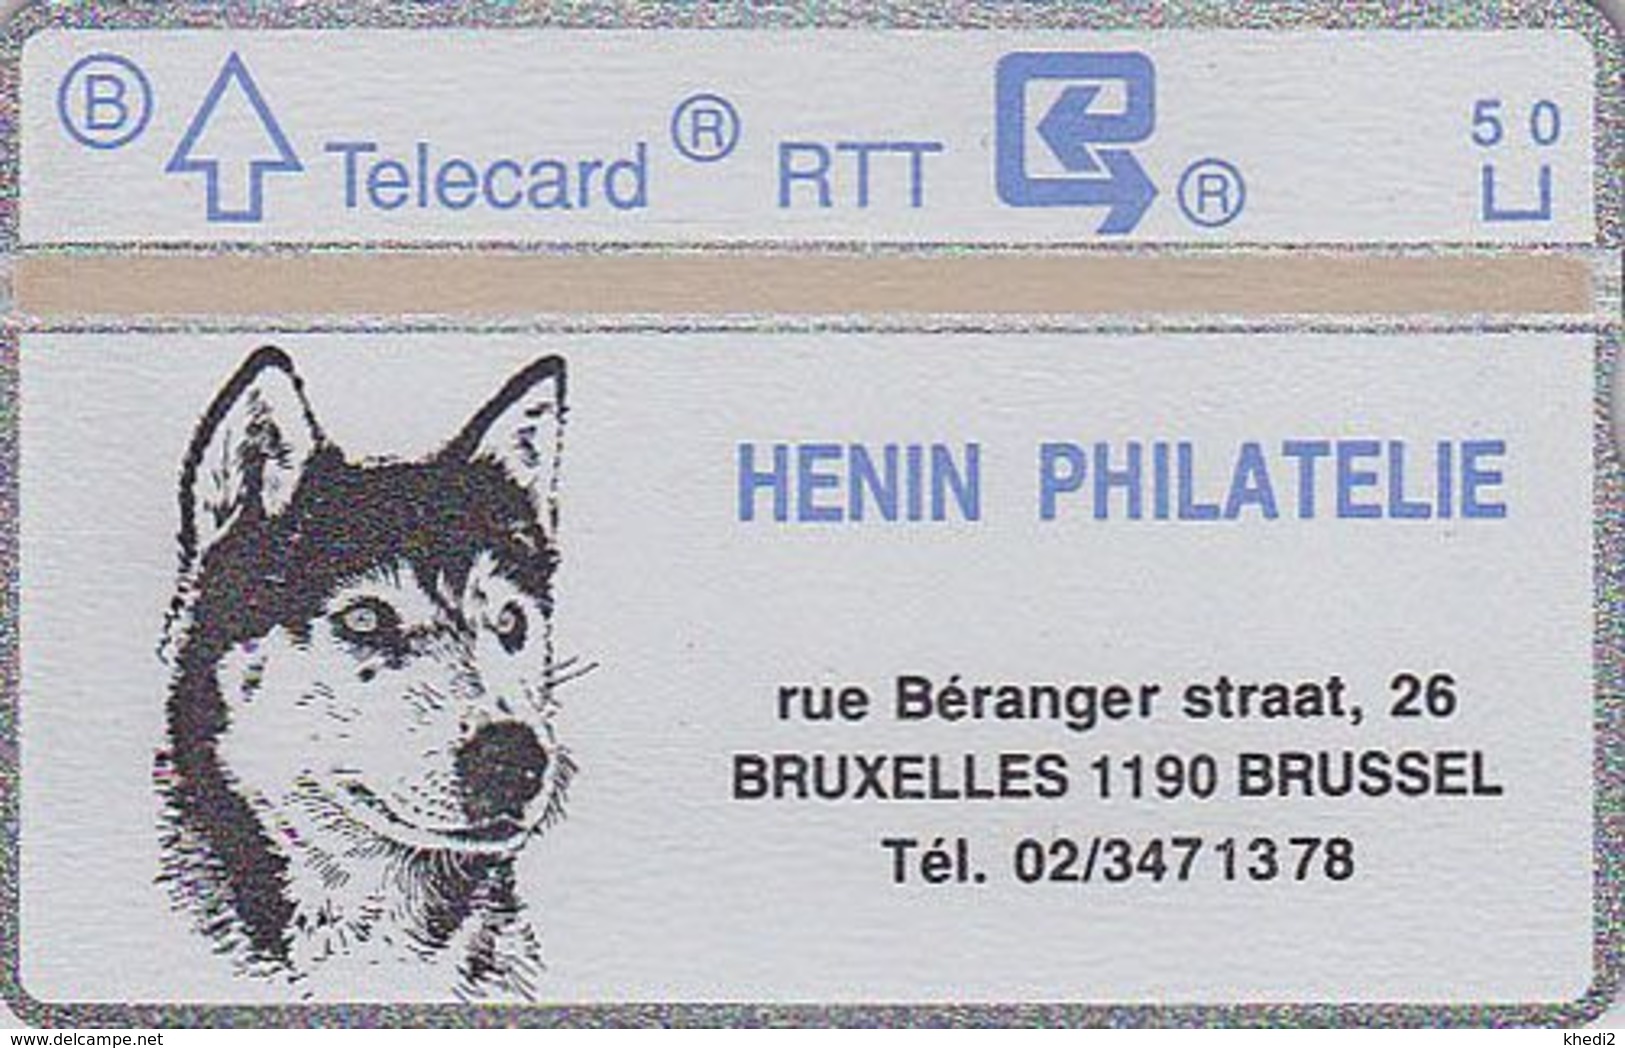 Télécarte Privée De Belgique LG L&G NEUVE - ANIMAL - CHIEN HUSKY  - DOG MINT Phonecard - HUND Telefonkarte - 588 - Zonder Chip